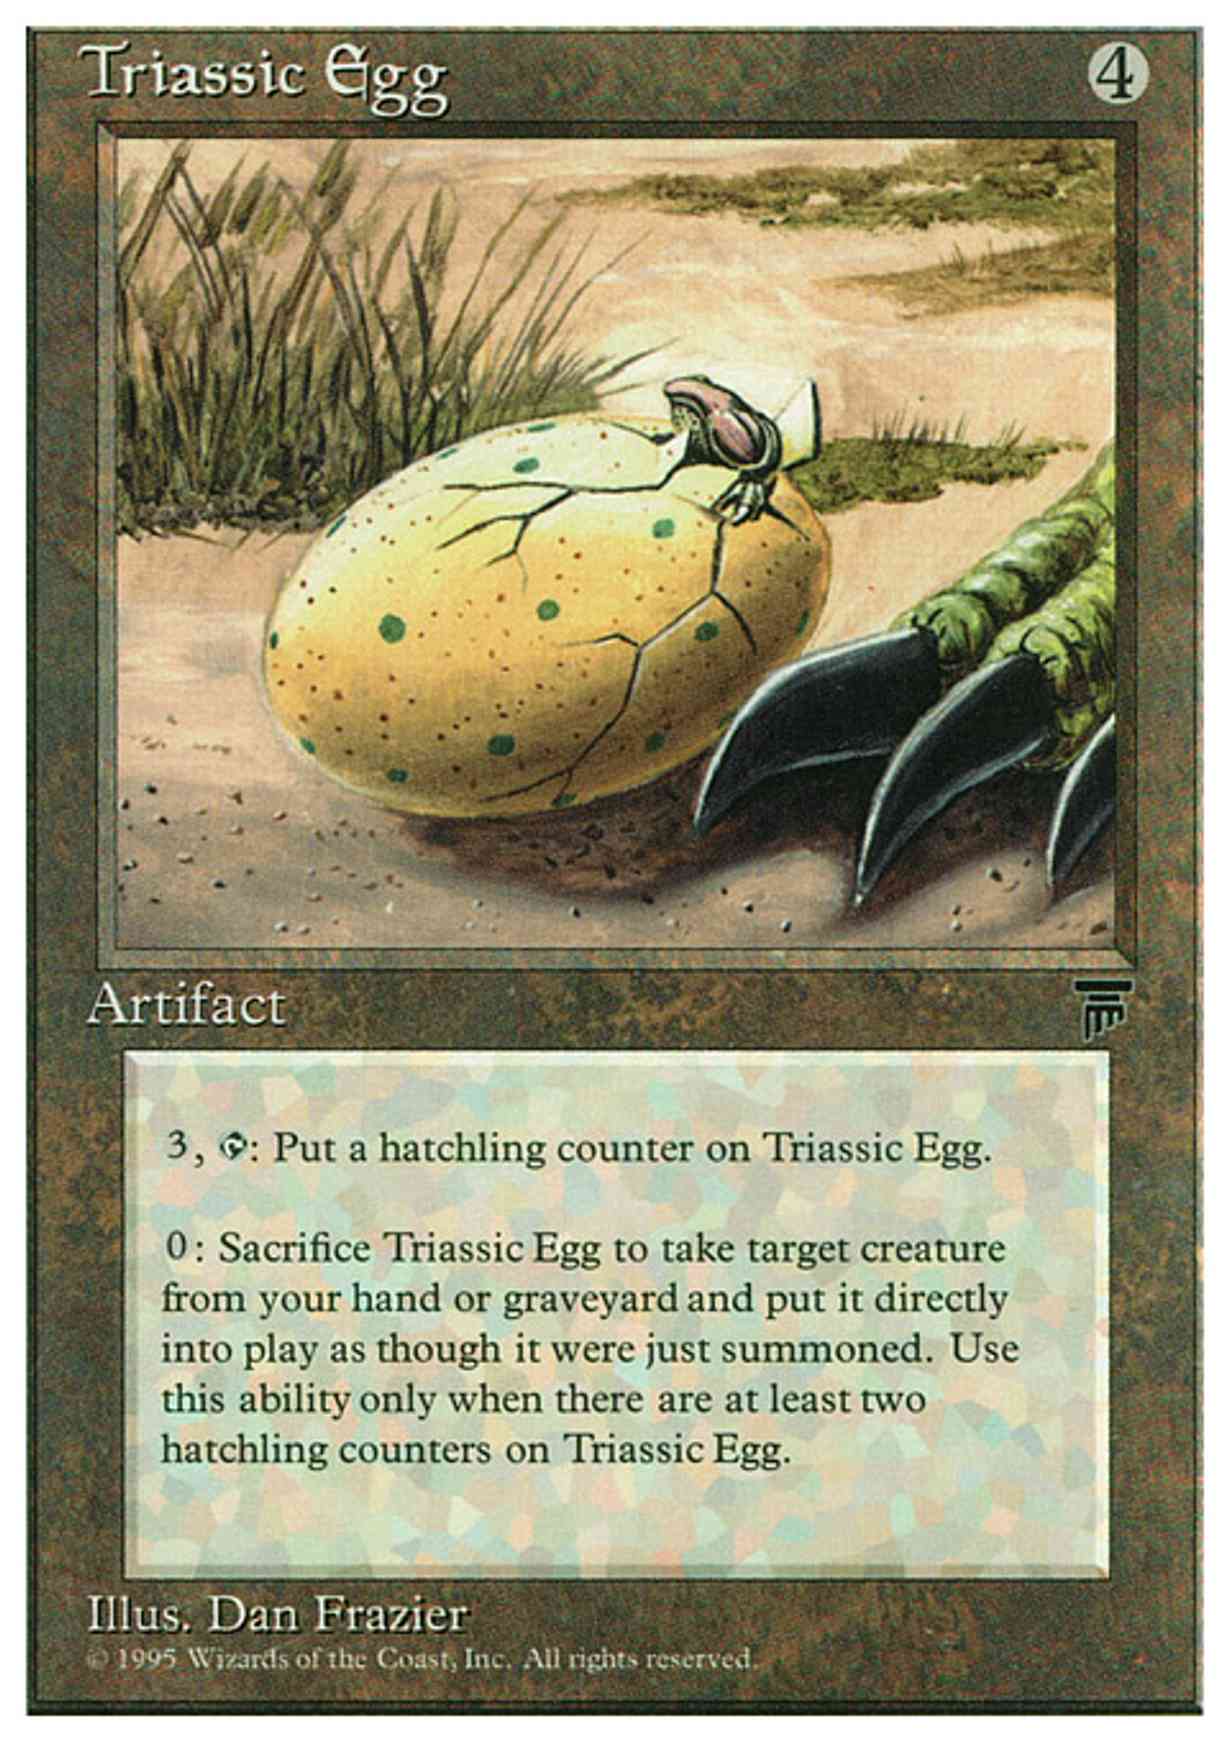 Triassic Egg magic card front